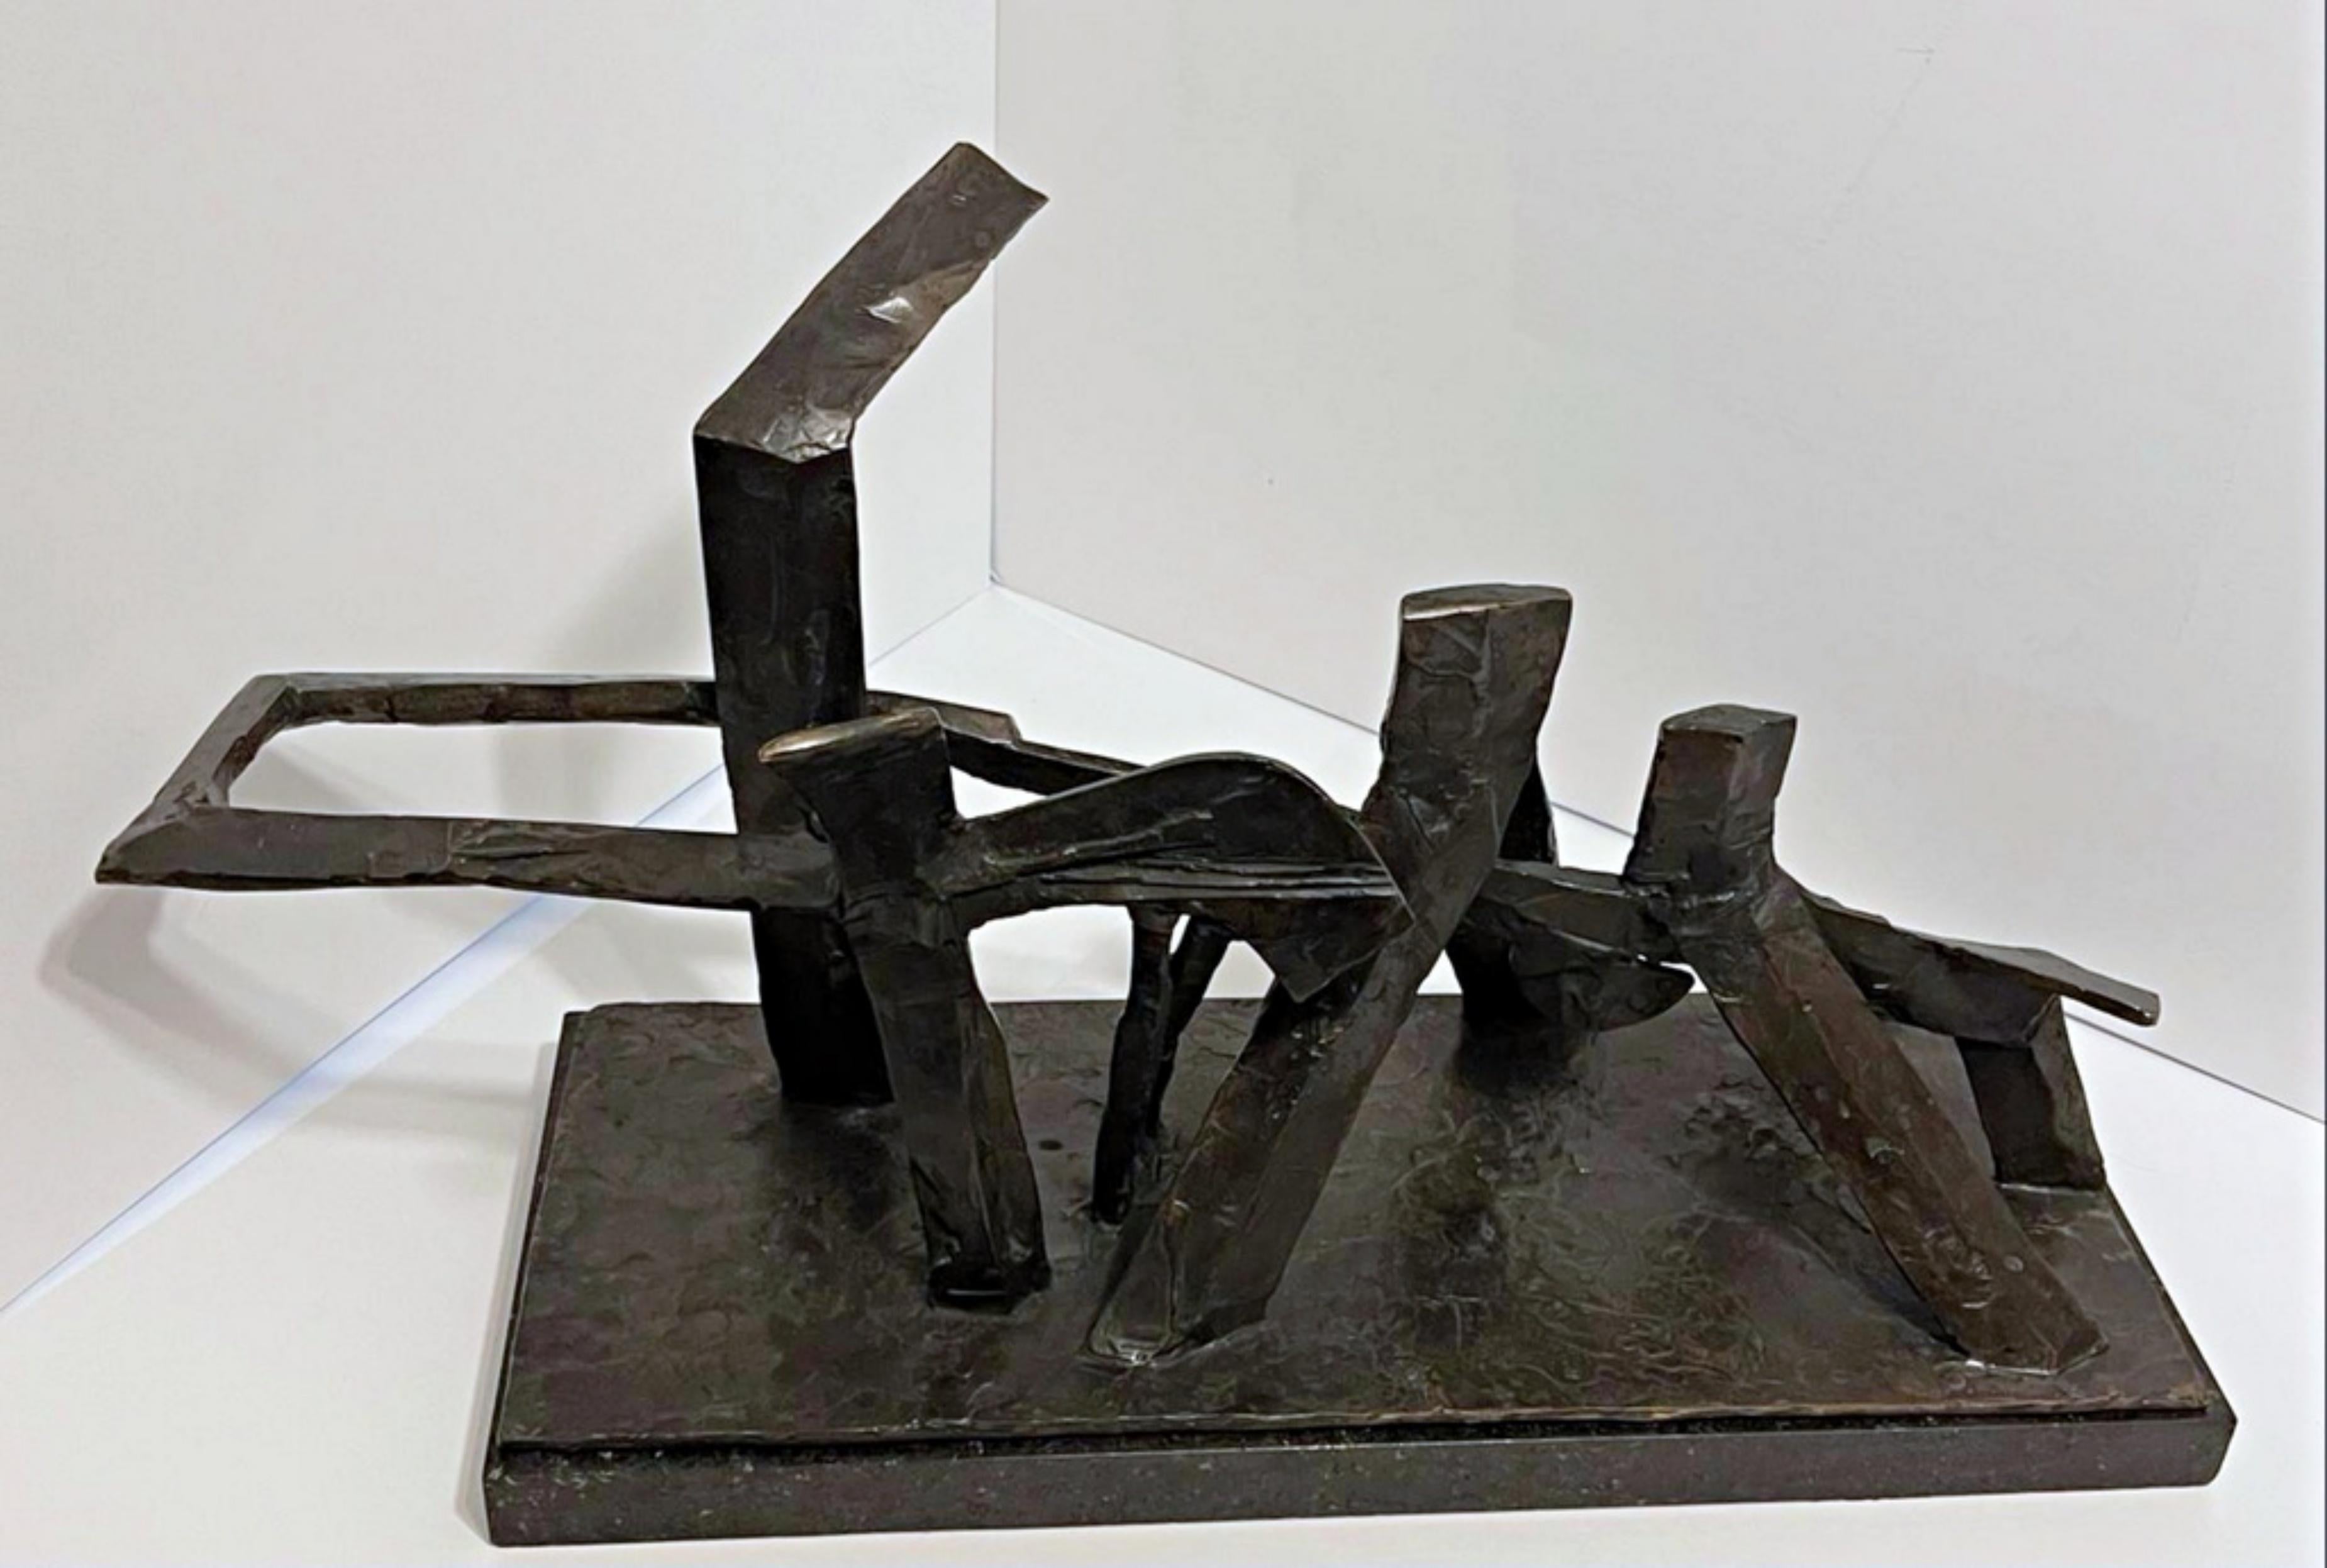 Uxmal, unique bronze sculpture by Greek-American sculptor and Harvard professor - Abstract Sculpture by Dimitri Hadzi 